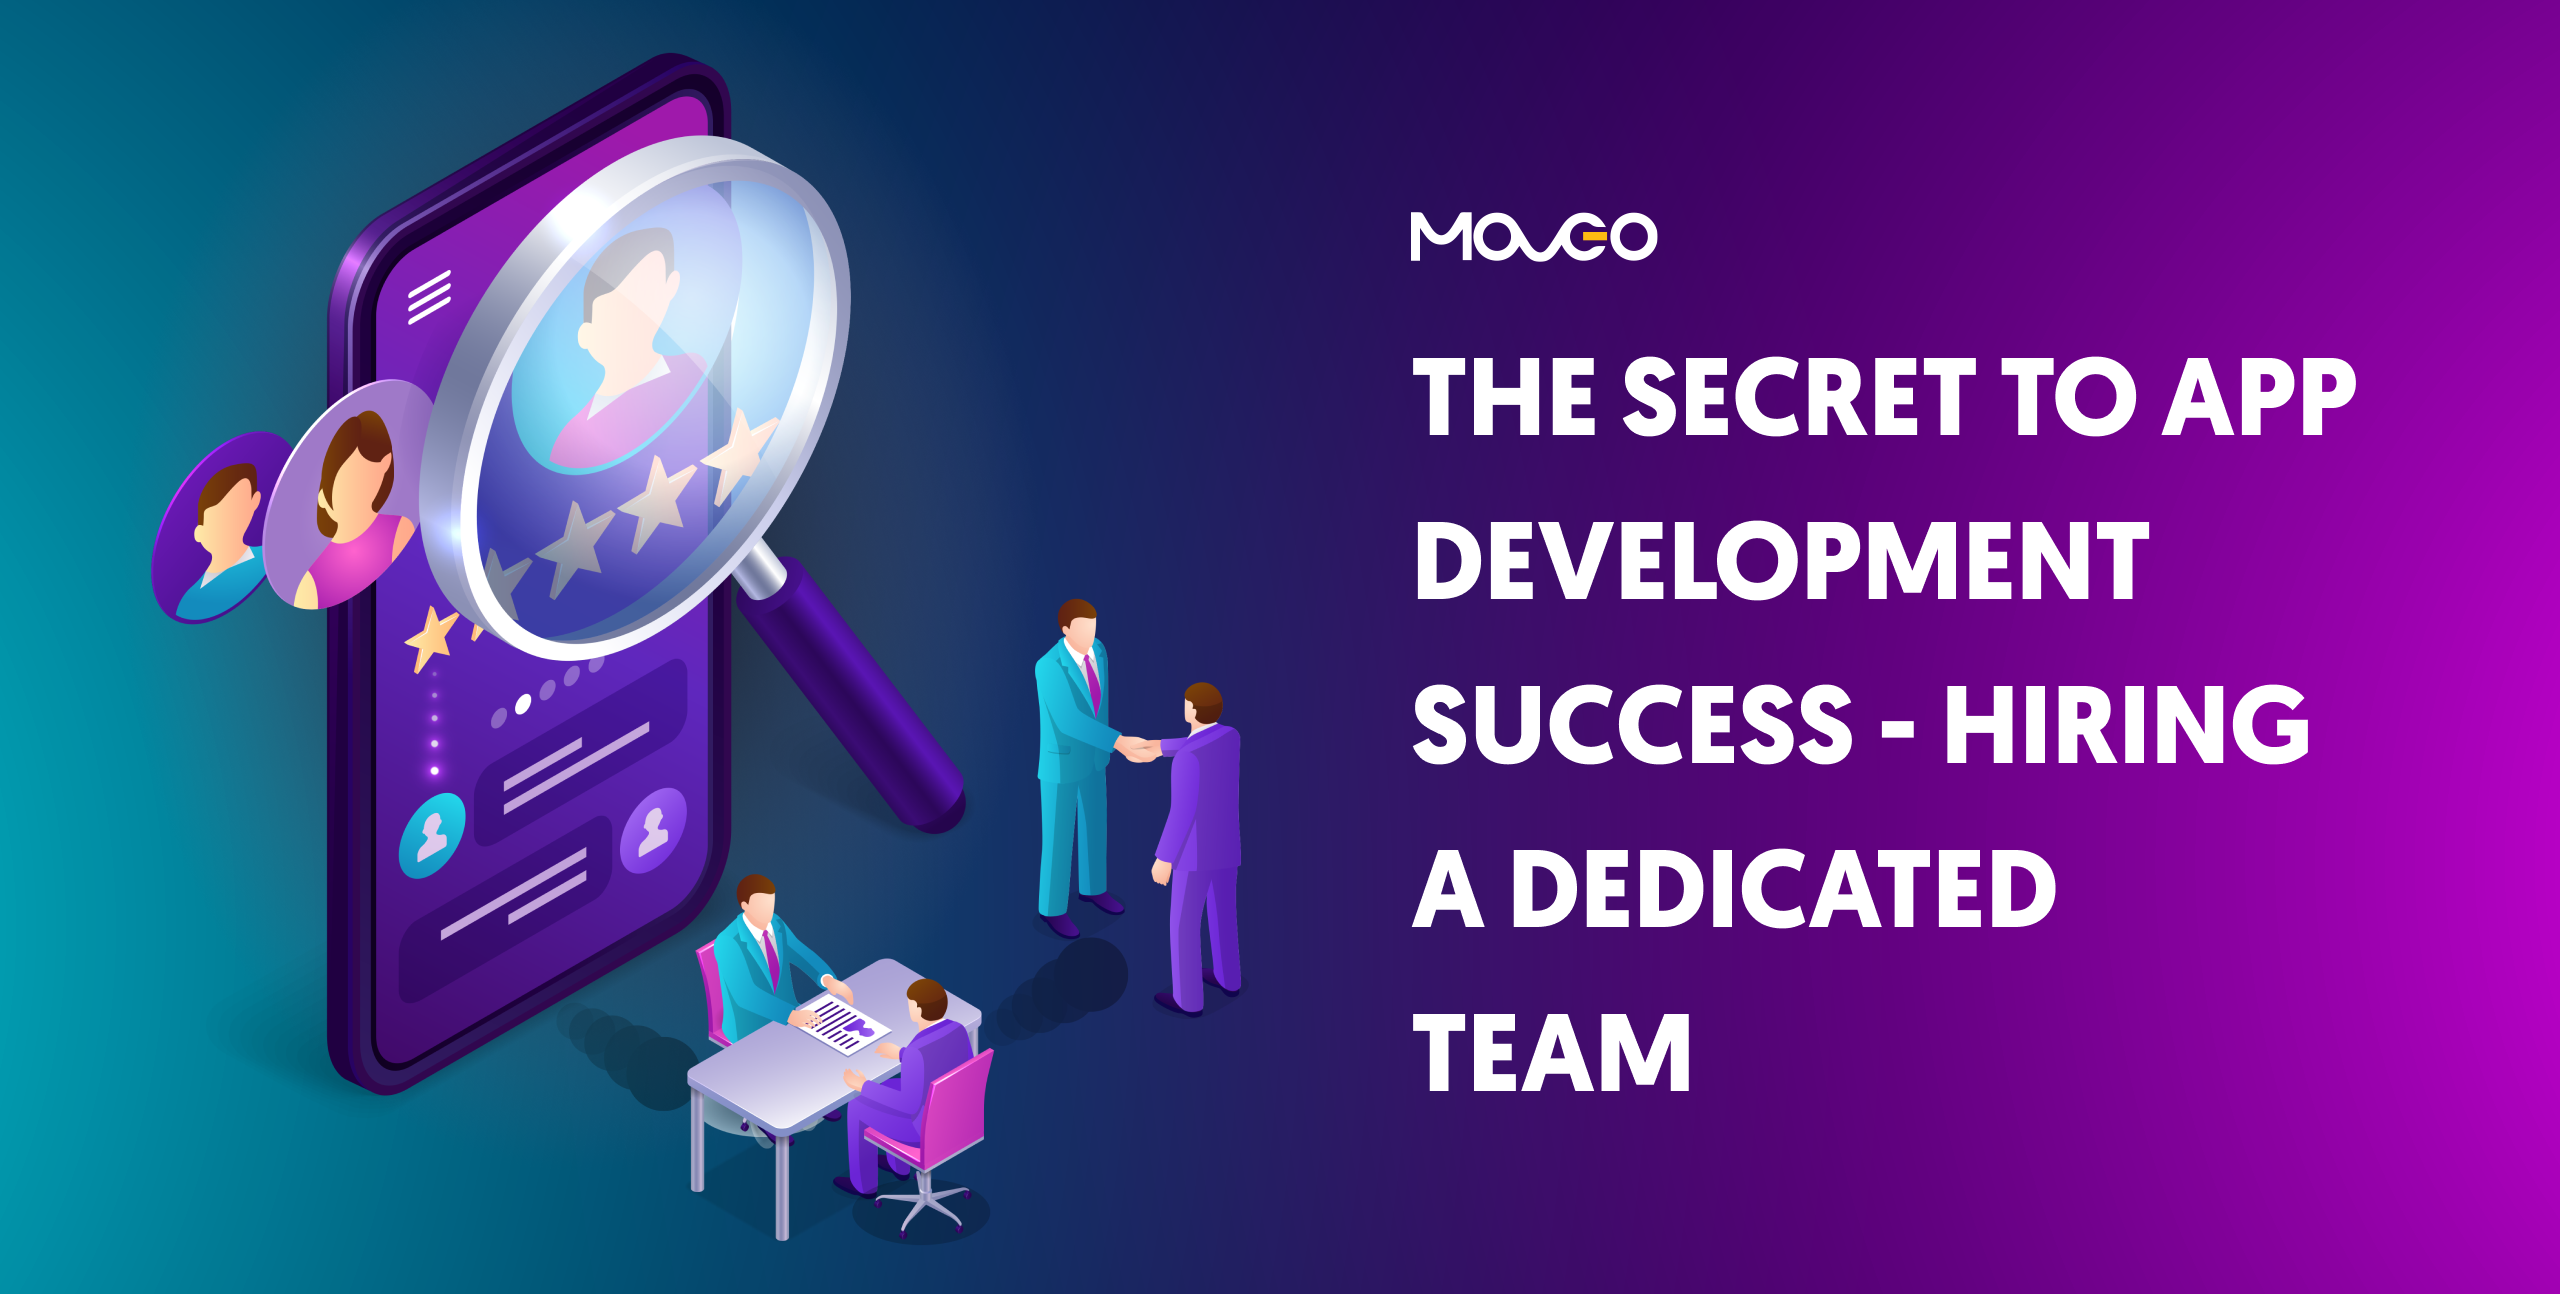 The secret to app development success hiring a dedicated team